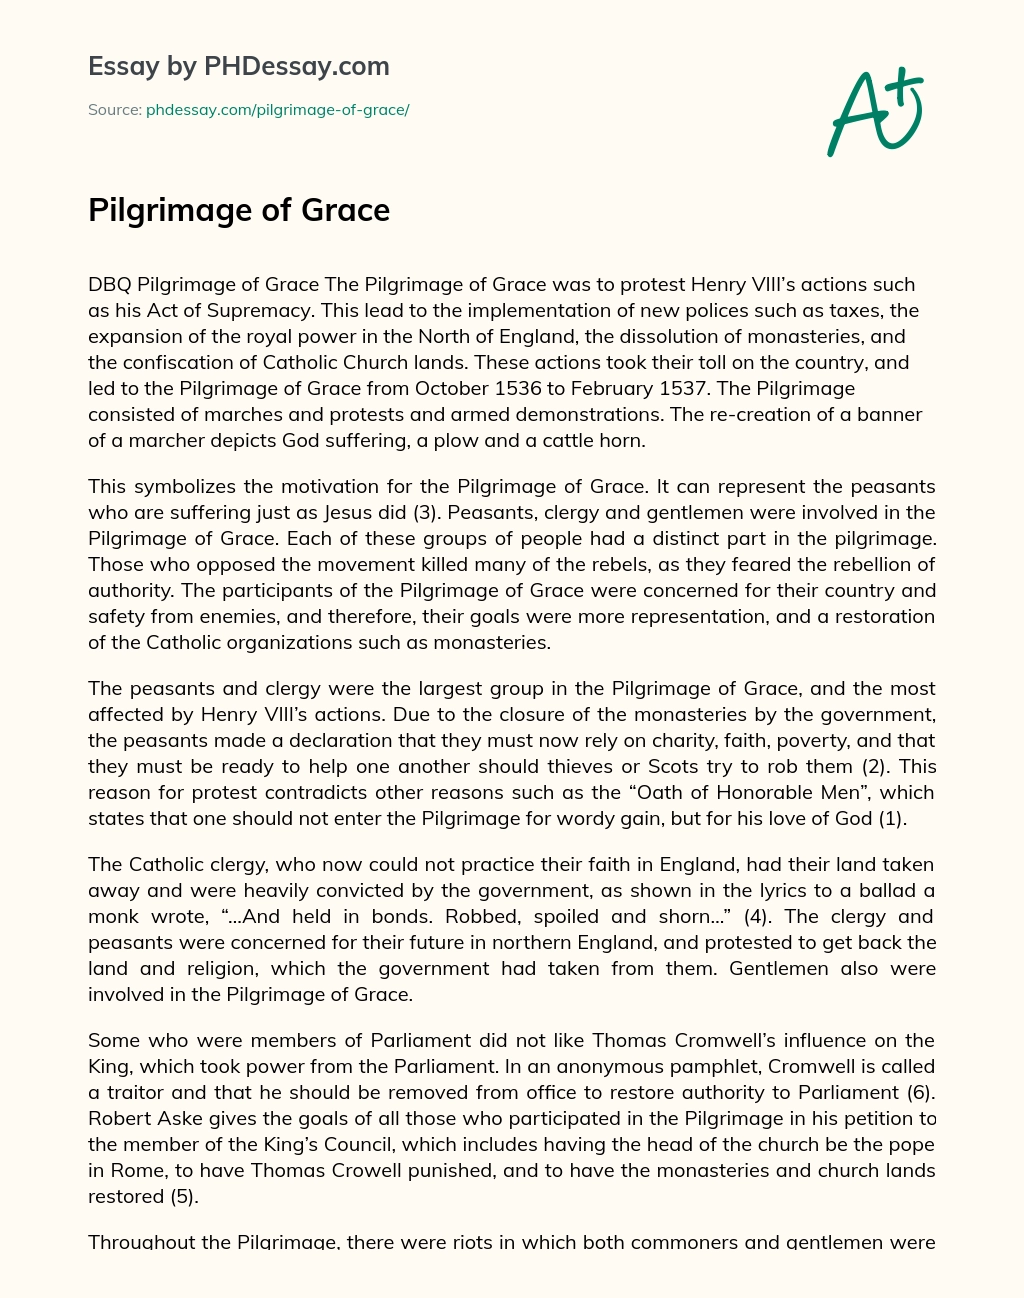 Pilgrimage of Grace essay